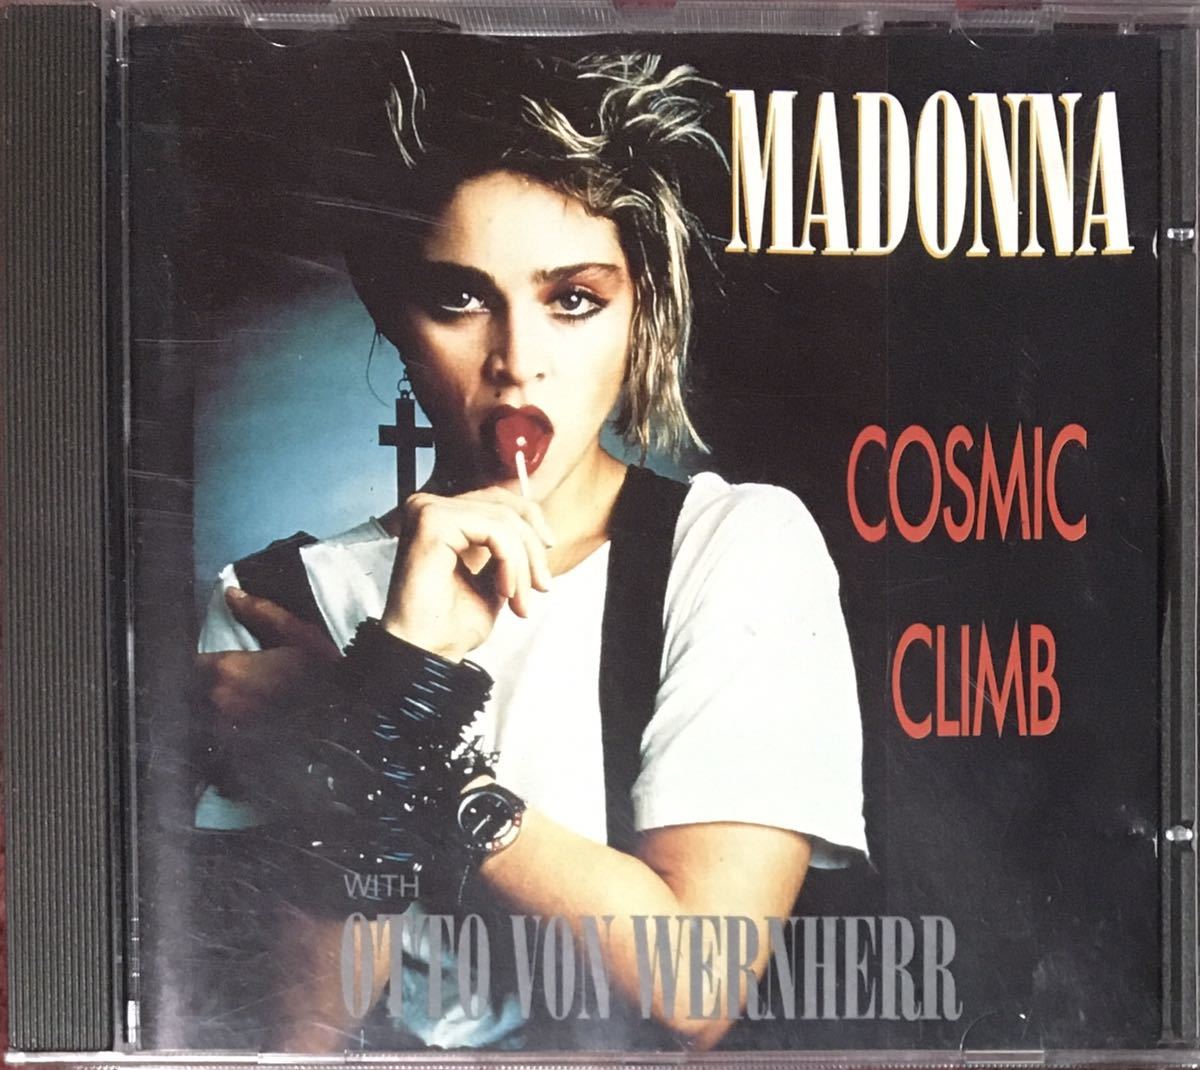 Madonna With Otto Von Wernherr [Cosmic Climb] 80s / US New Wave / Post Punk / エレポップ / シンセポップ / ダンスポップ_画像1